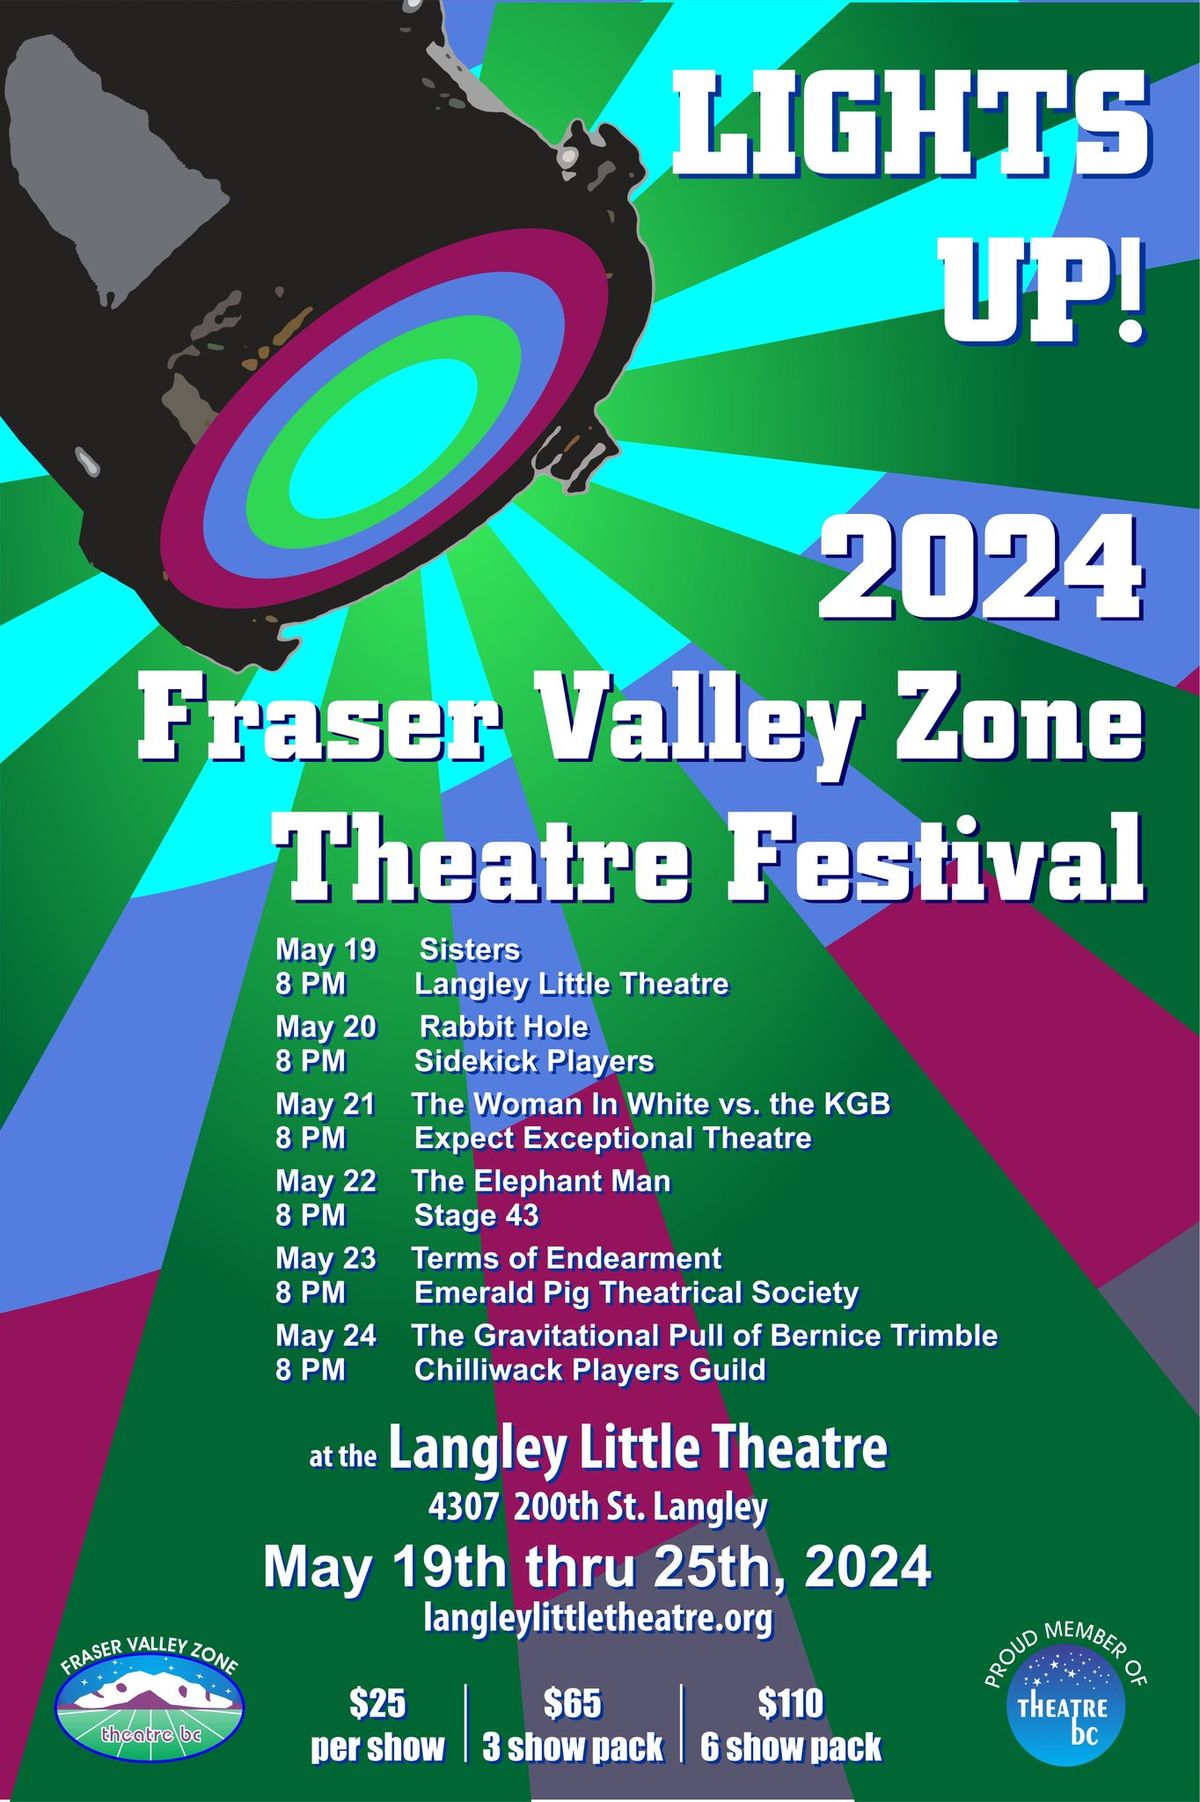 TheatreBC's Fraser Valley Zone Festival